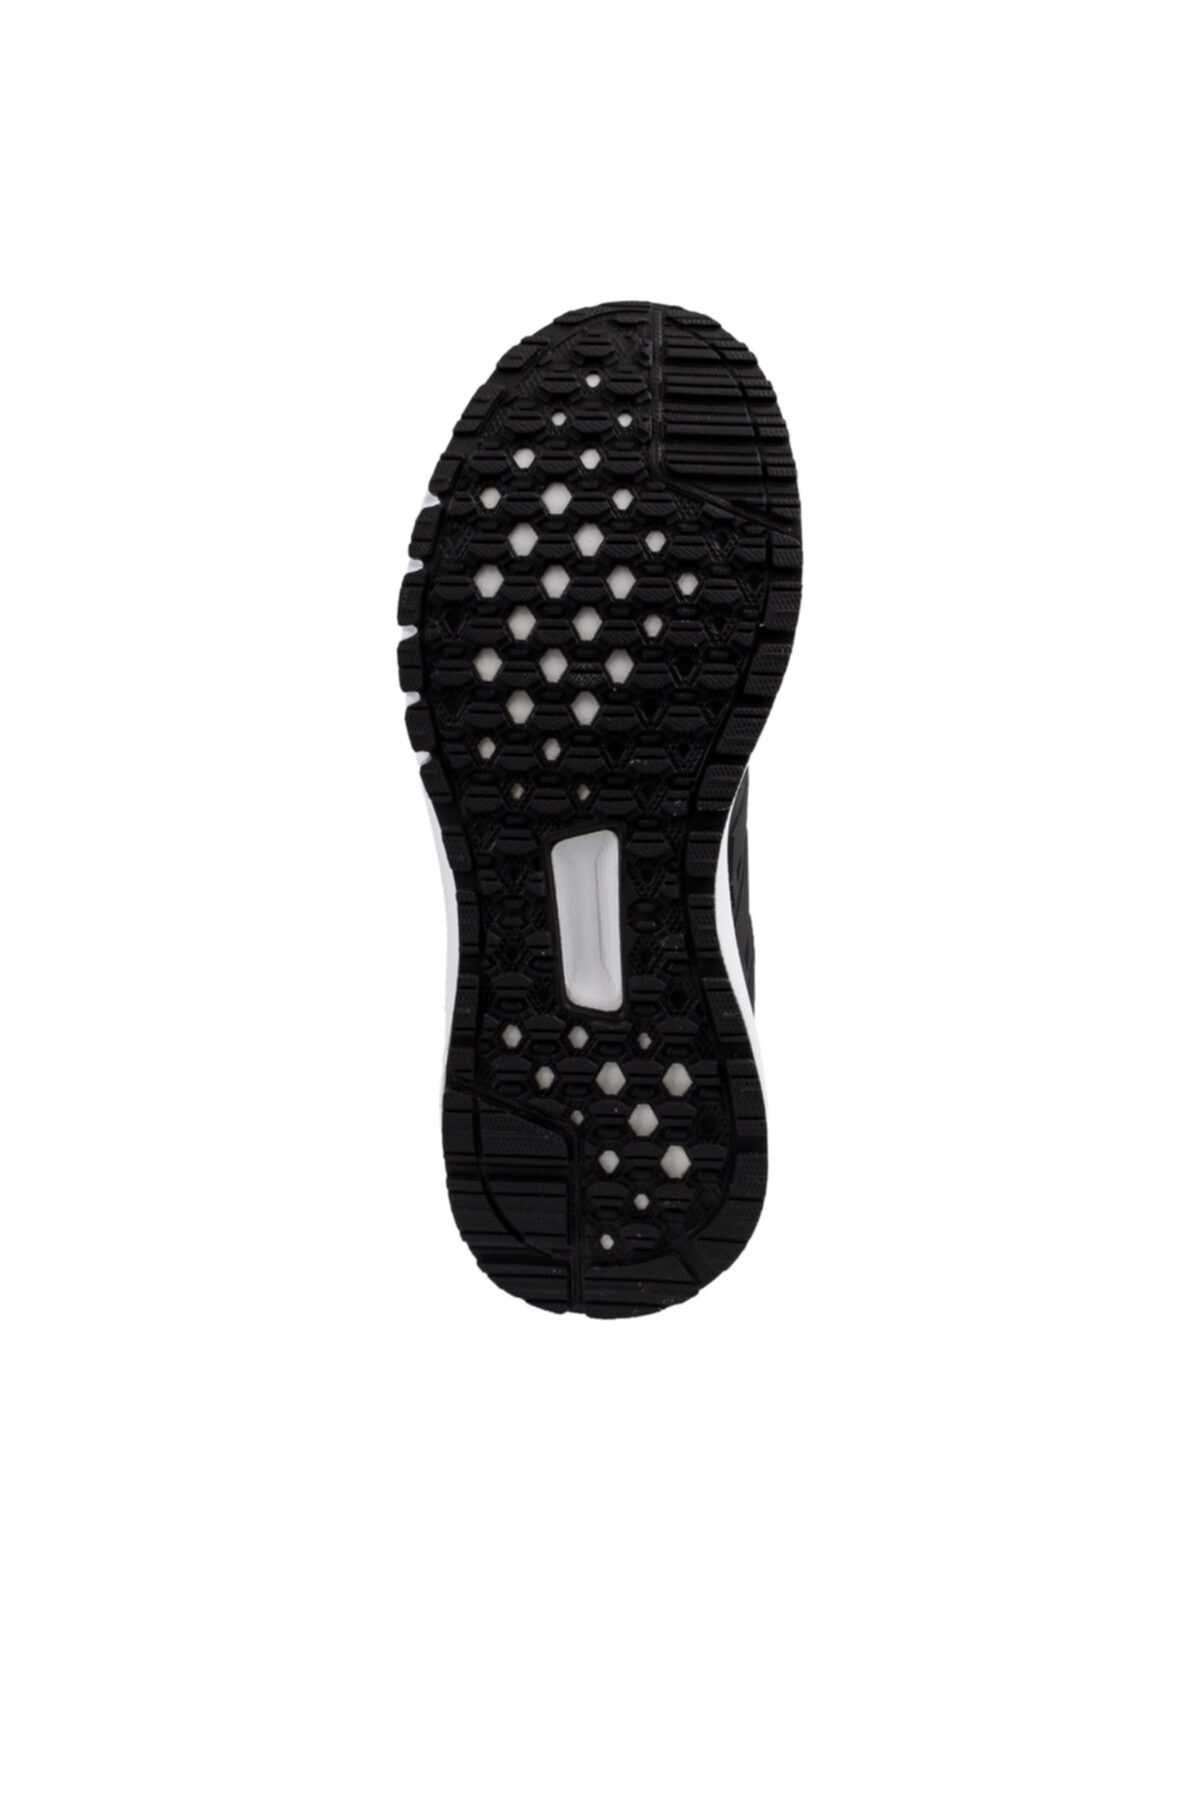 خرید انلاین کفش دویدن زنانه ترک برند ادیداس رنگ مشکی کد ty51284309